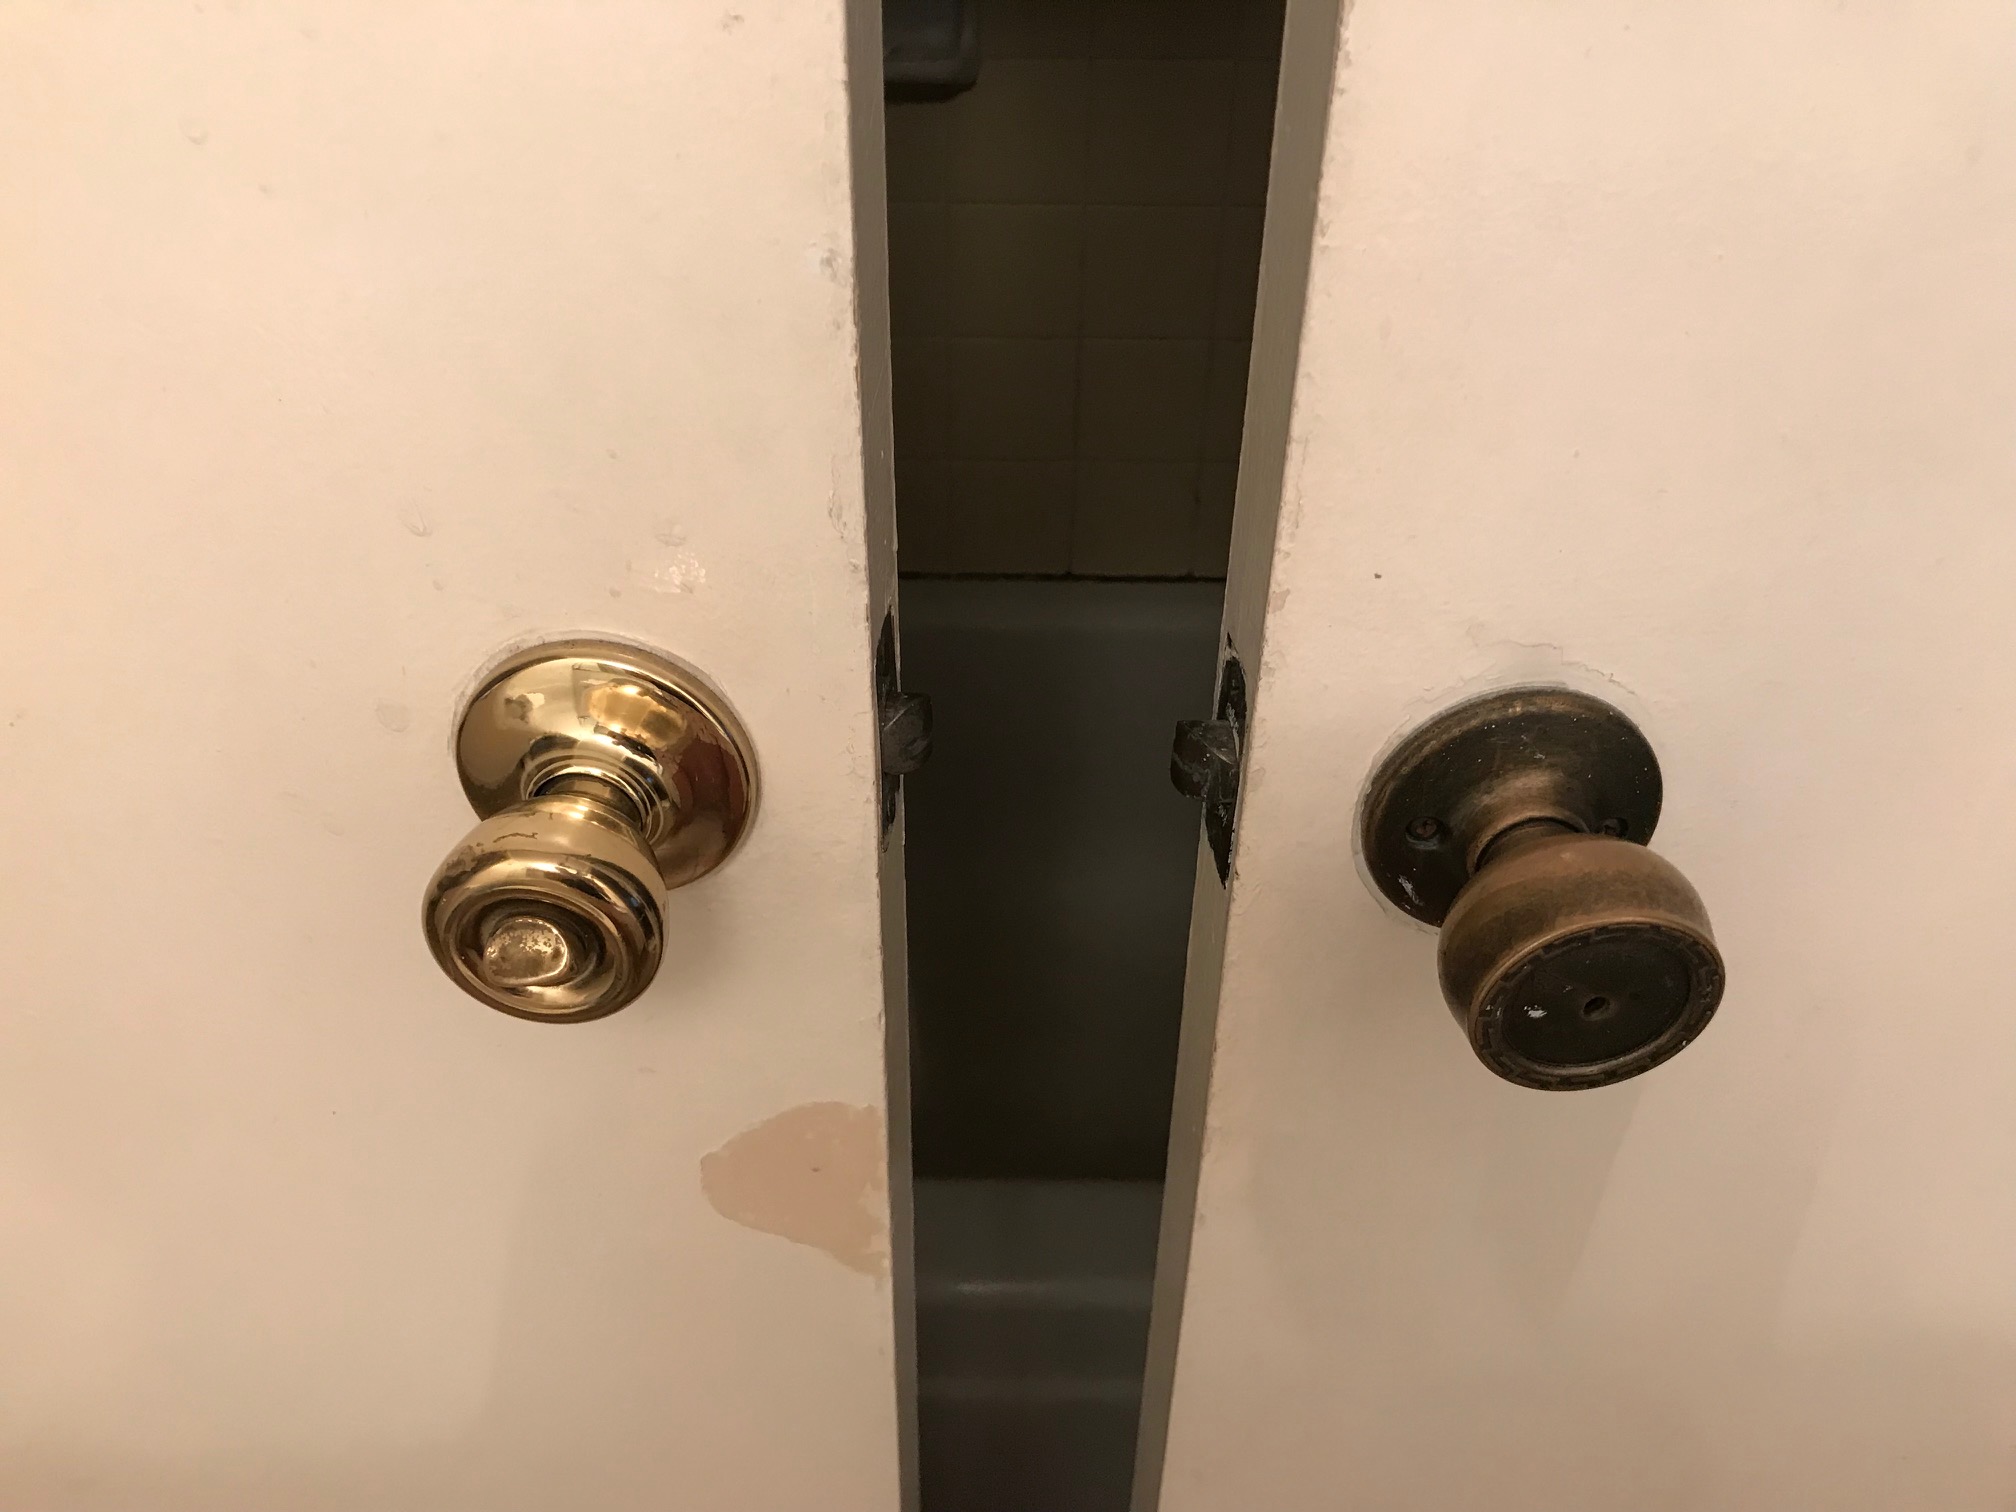 No locks on bathroom doors